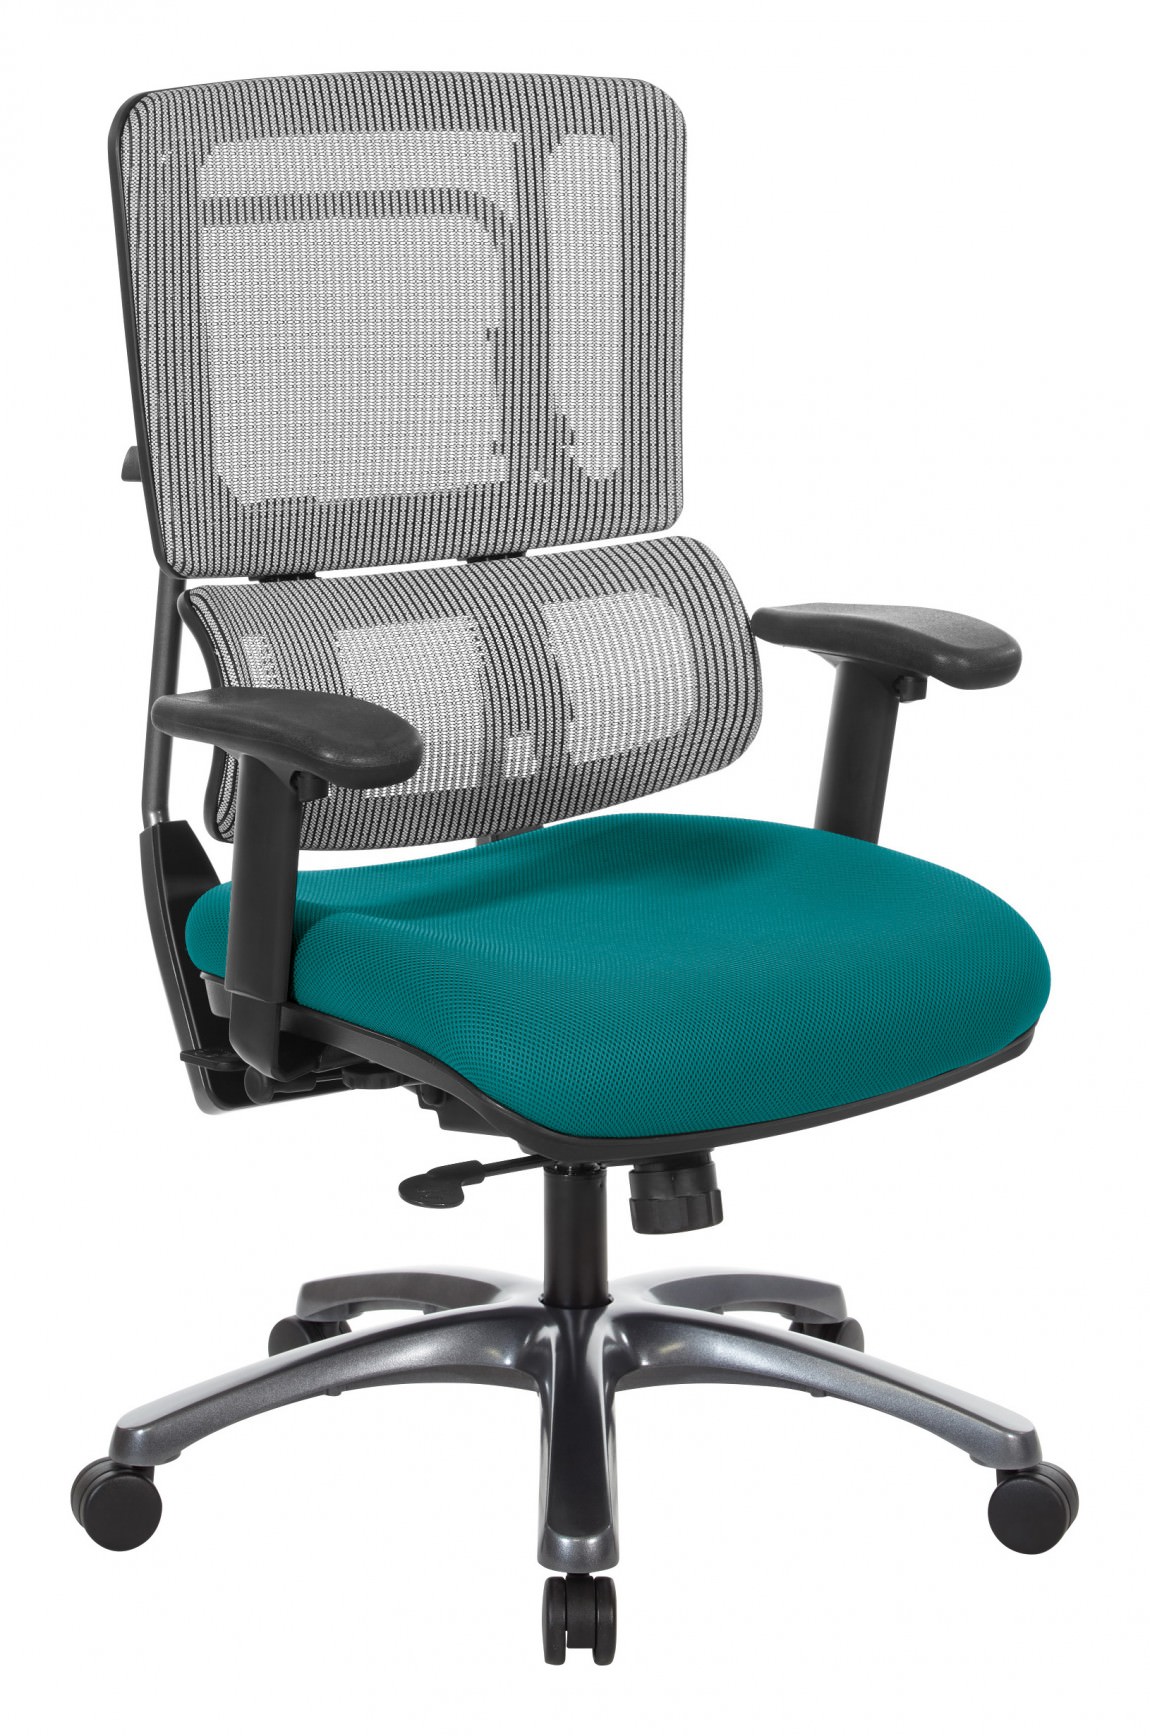 https://madisonliquidators.com/images/p/1150/26789-task-chair-with-adjustable-lumbar-support-1.jpg